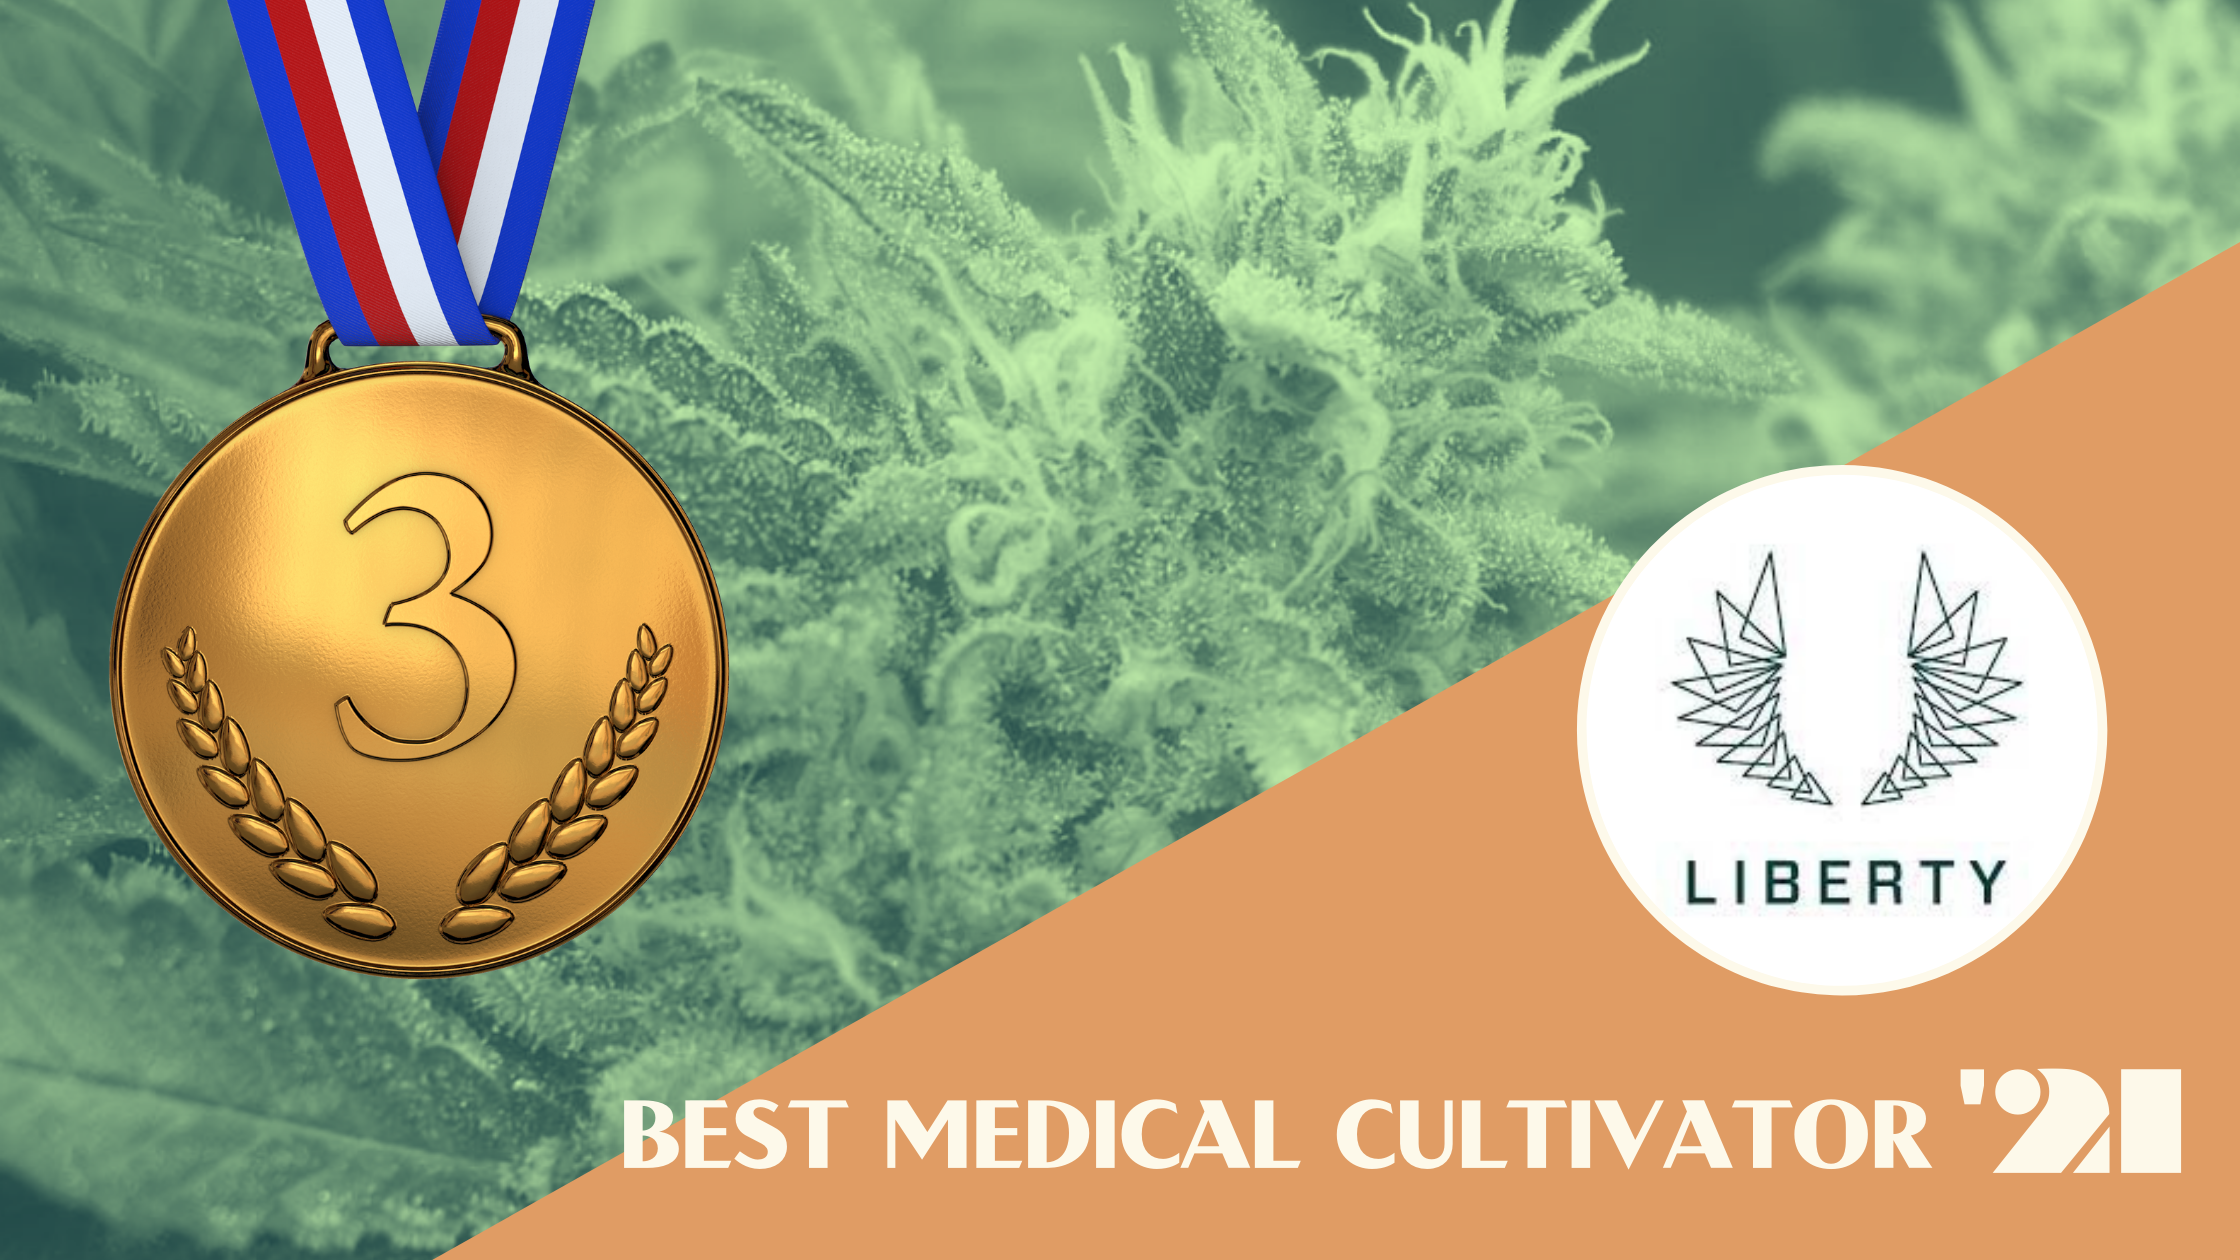 Best Medical Cultivator liberty